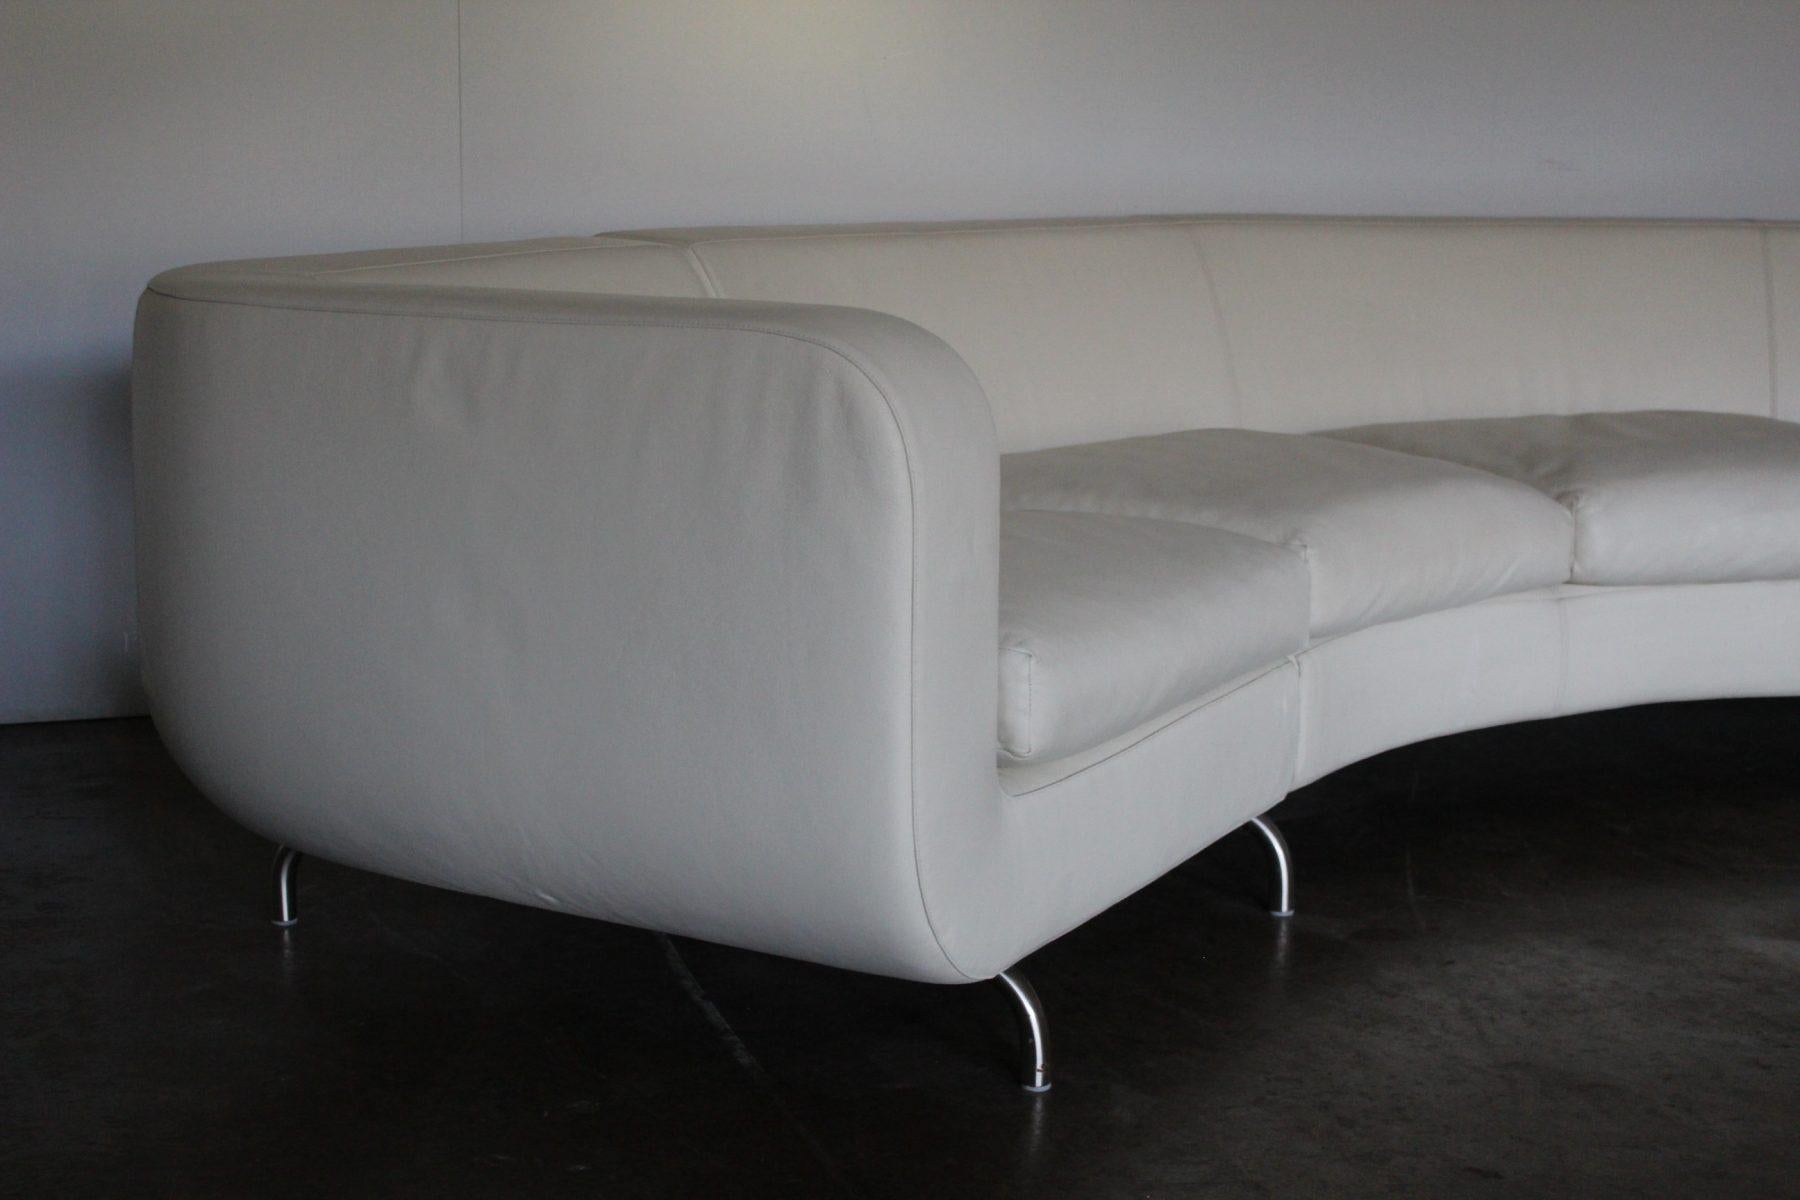 Rare Minotti “Dubuffet” Curved Sofa, in Cream “Pelle” Leather 1